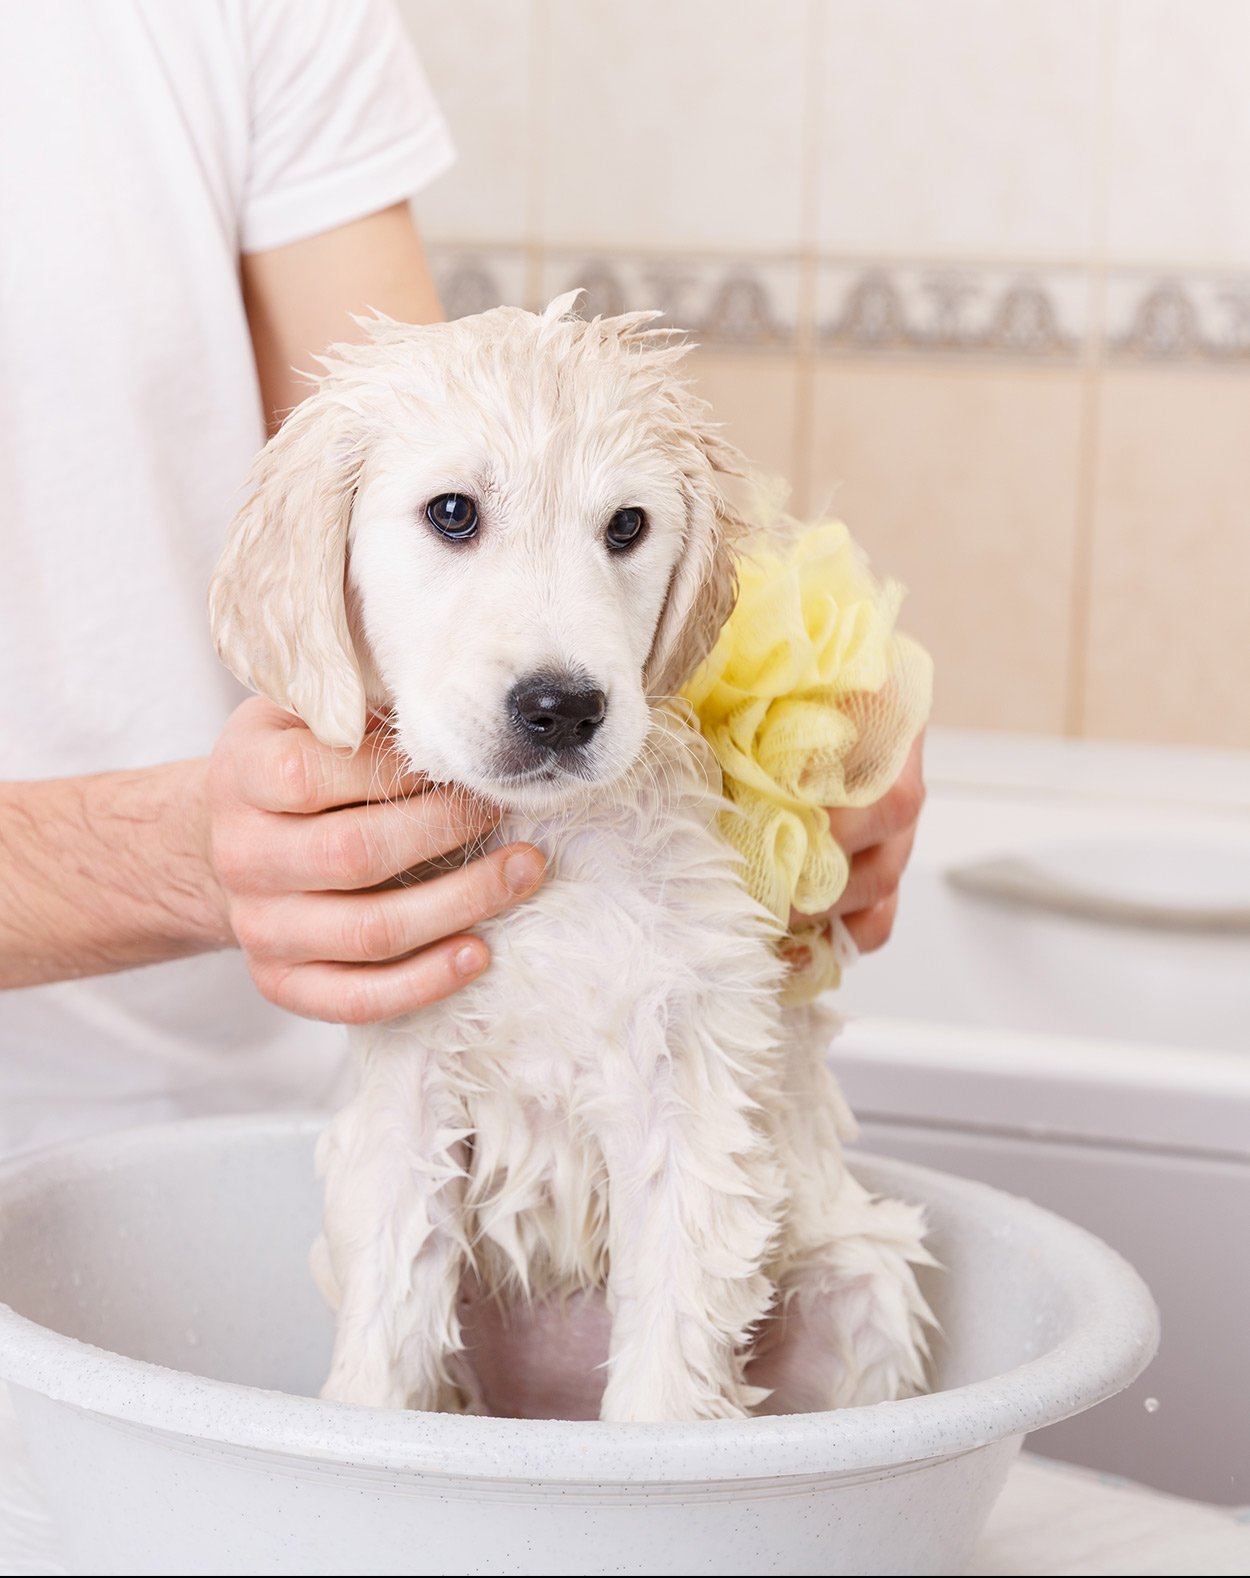 Best Shampoo for Golden Retriever Dogs â Our Guide